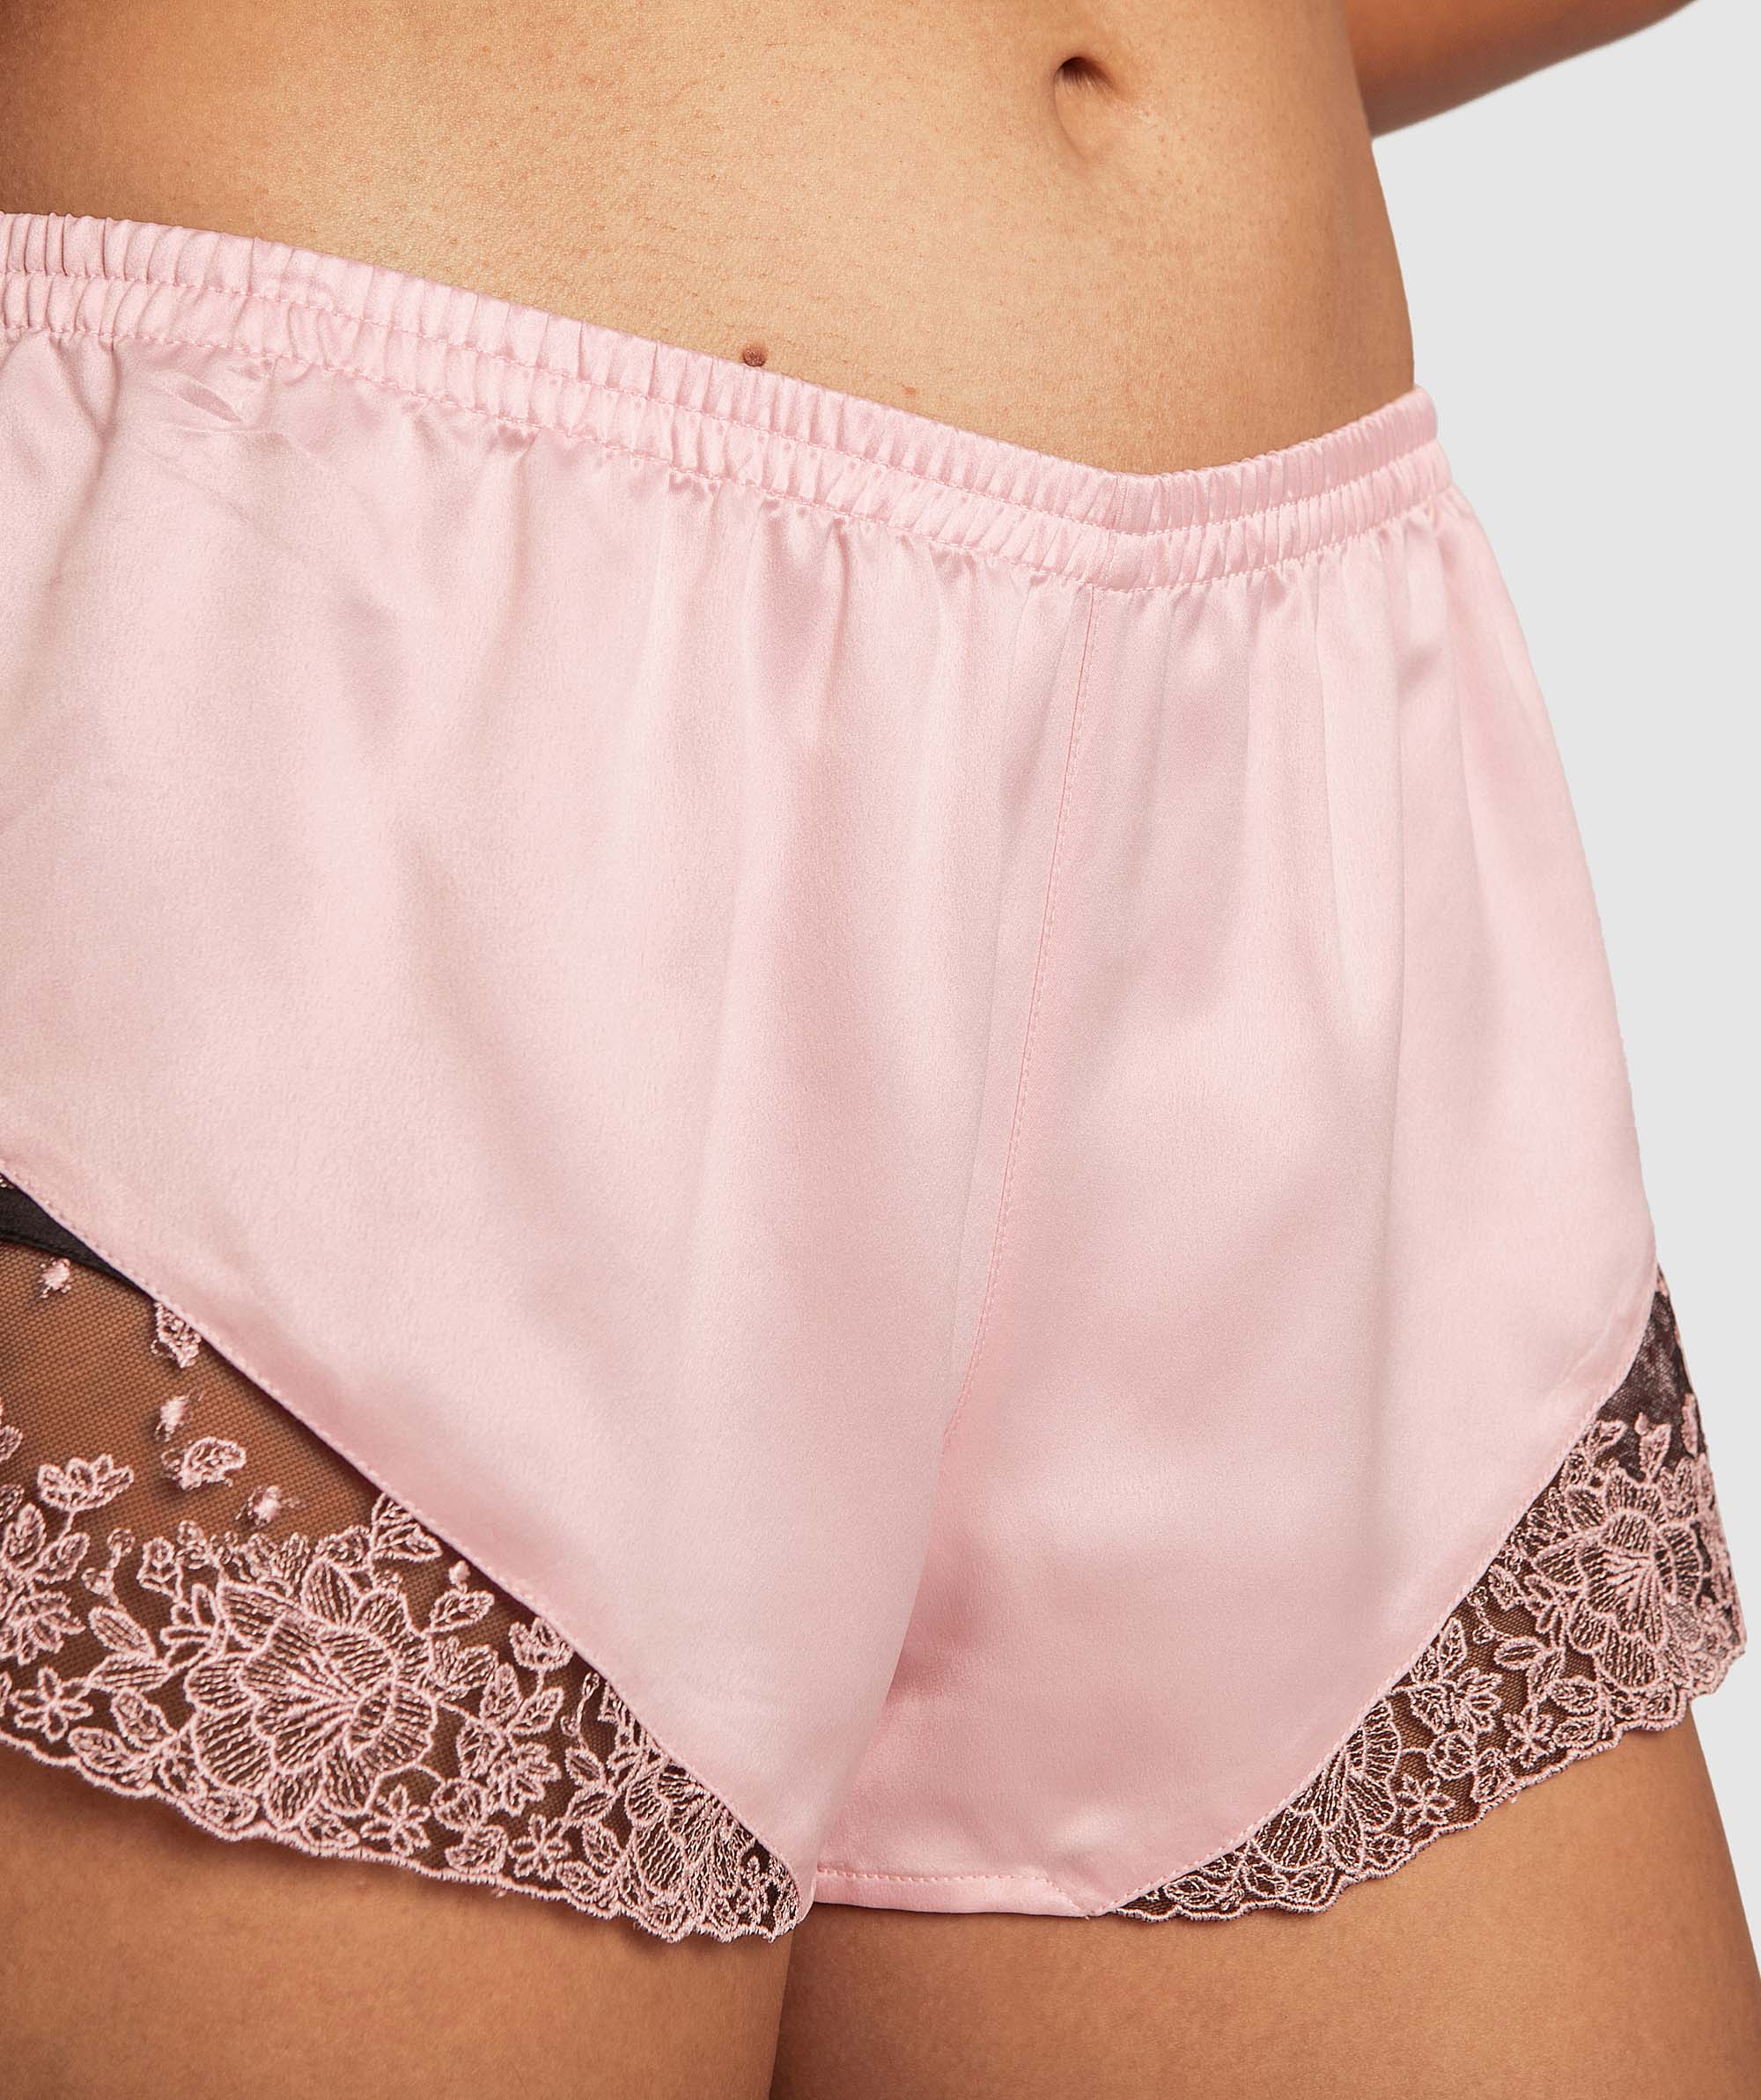 Antoinette Lace Shorts - Light Pink 